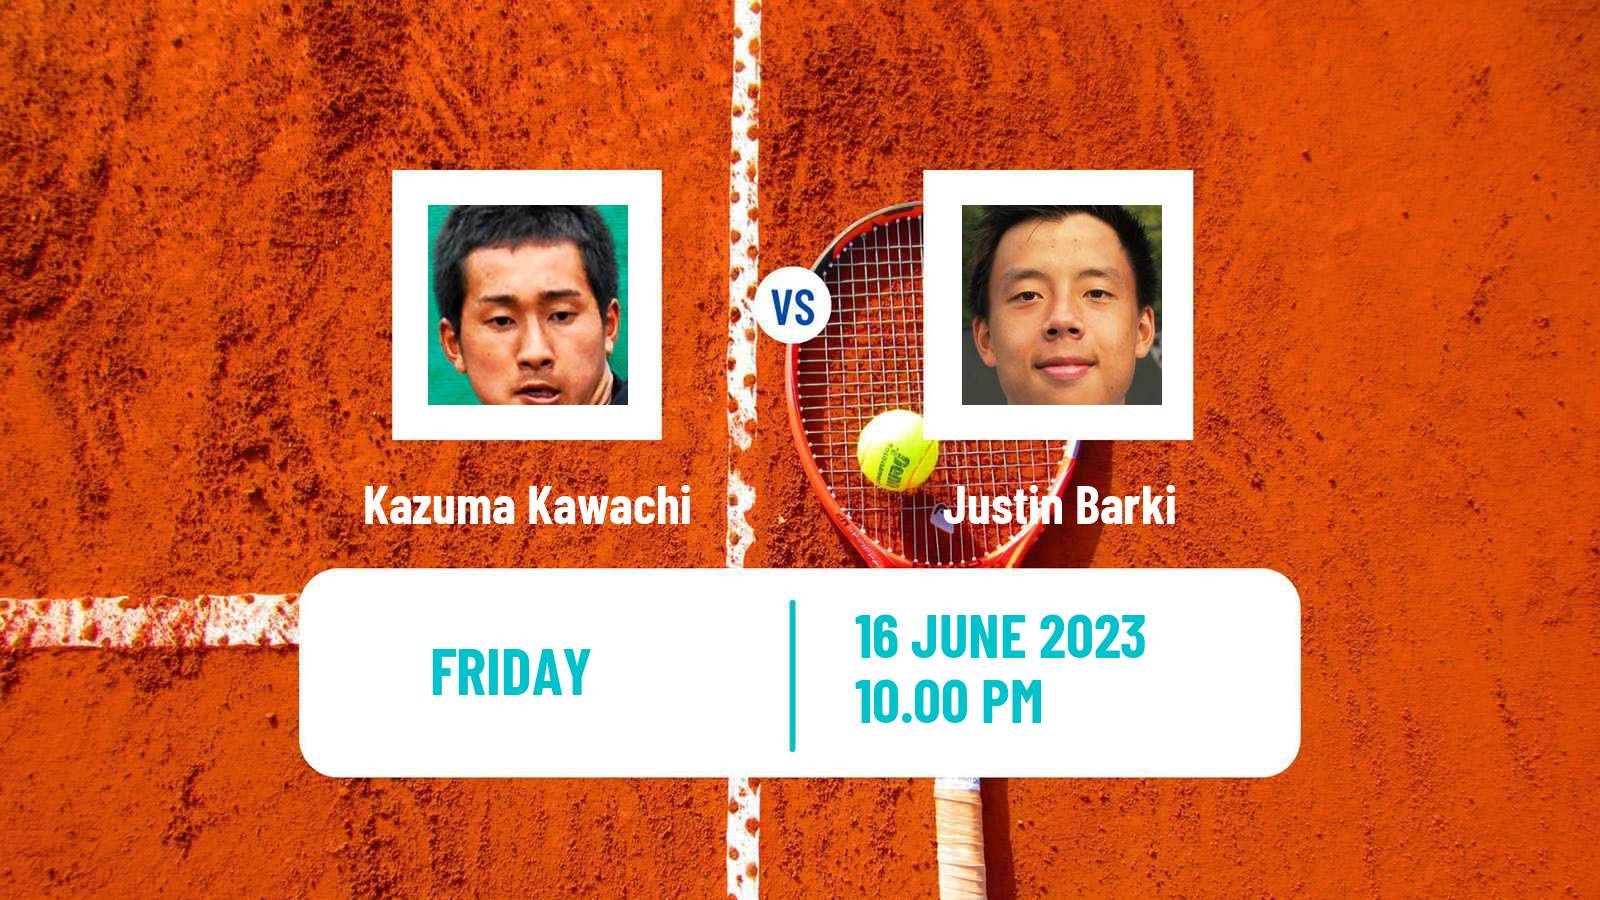 Tennis ITF M15 Jakarta 3 Men Kazuma Kawachi - Justin Barki